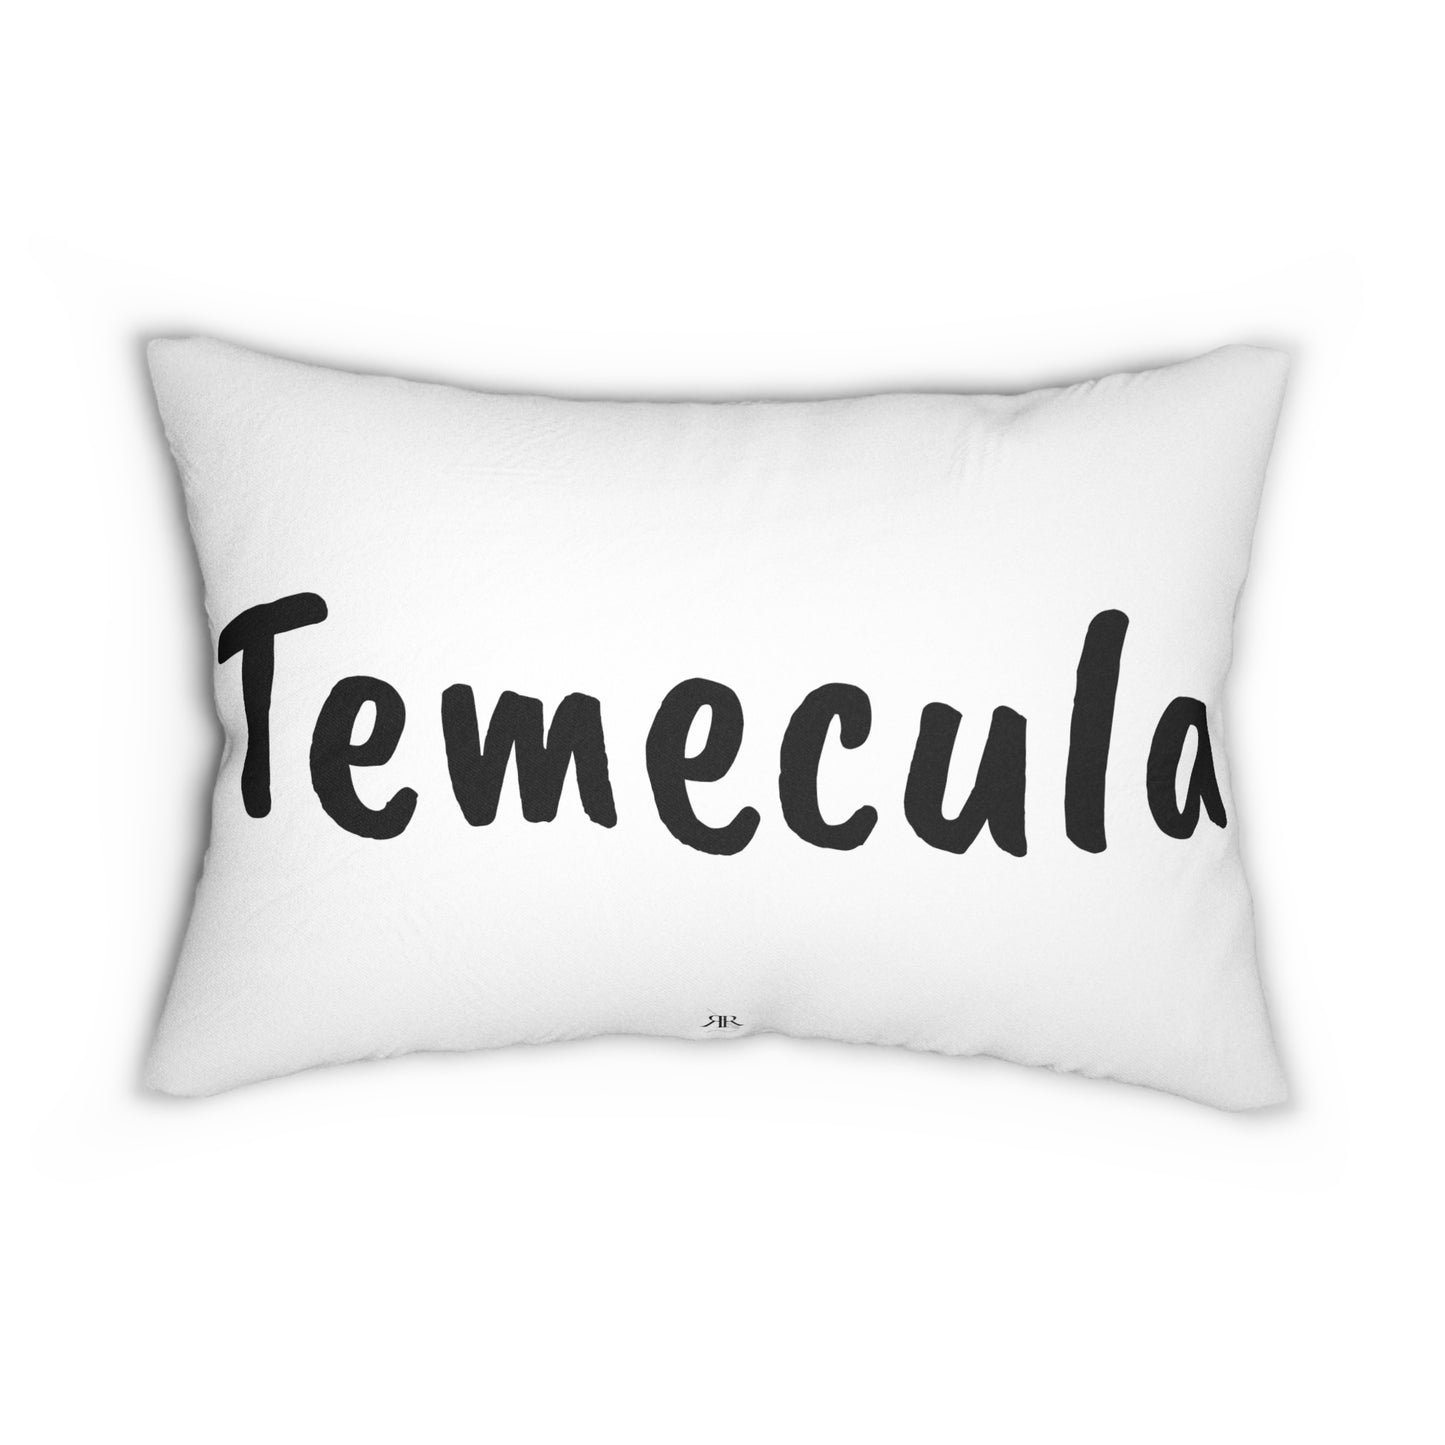 Temecula Lumbar Pillow featuring "Afternoon Vines" painting and "Temecula"